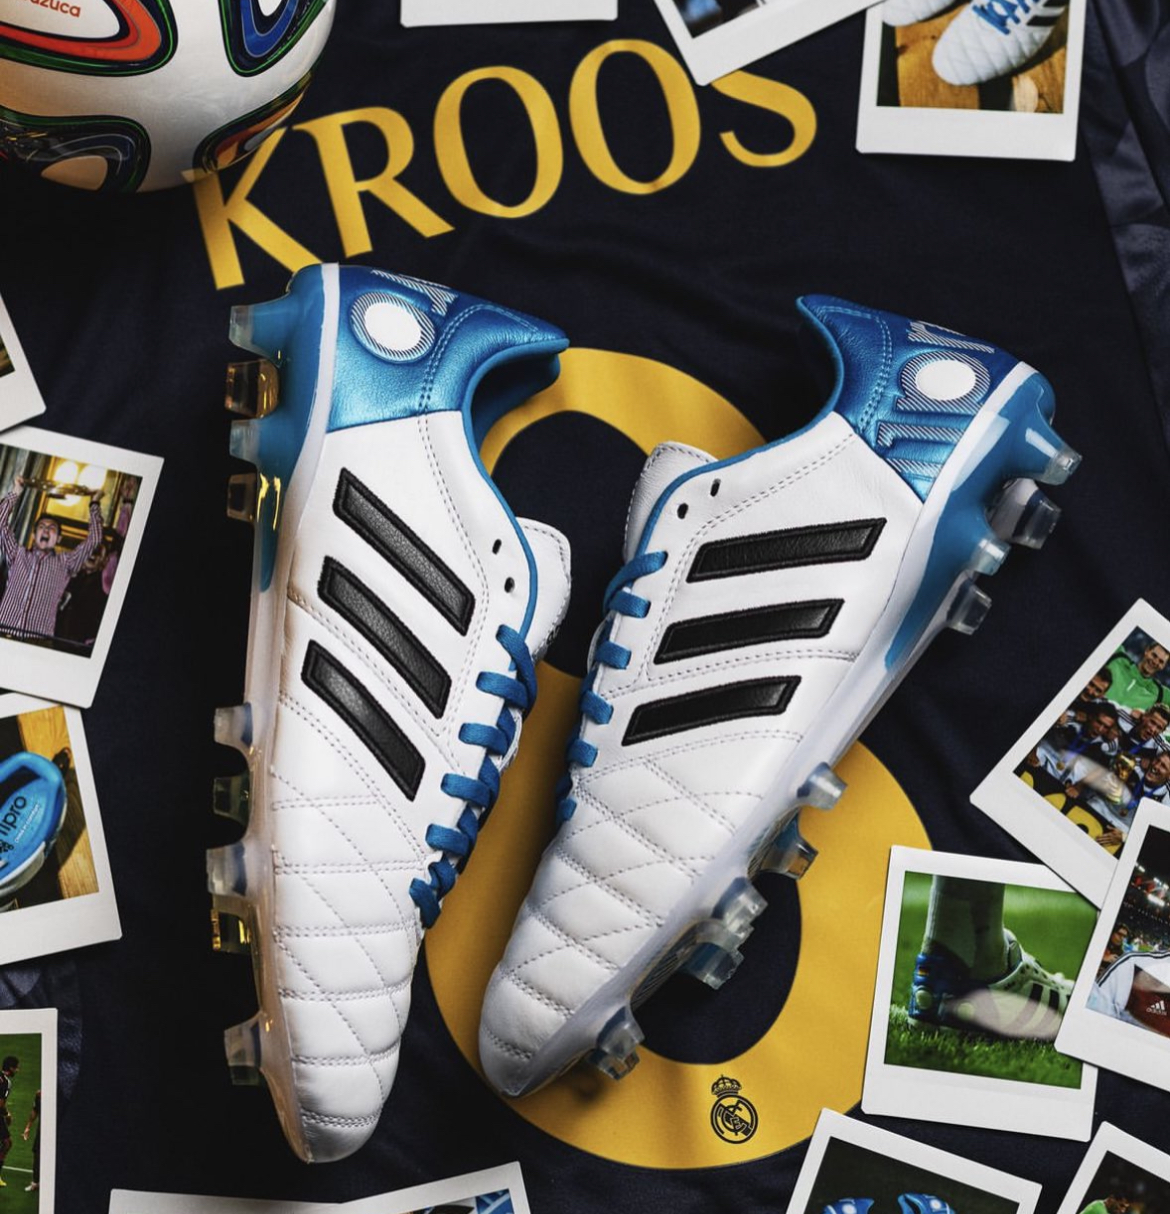 Adidas relança chuteira que Toni Kroos utiliza desde 2013